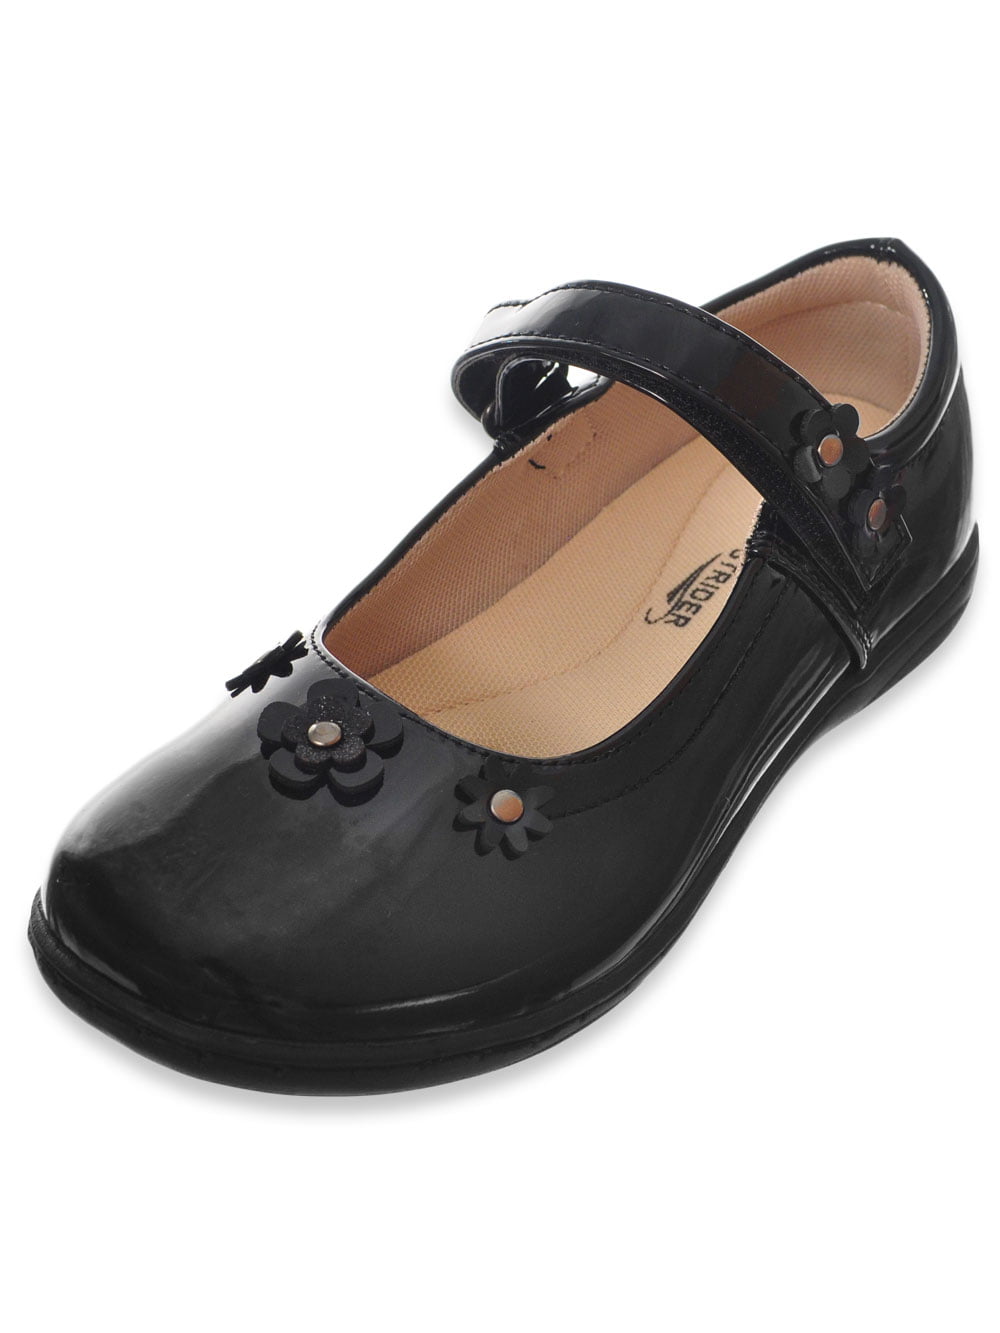 Kid Girls Mary Jane Adjustable Buckle Comfort School Uniform Shoes Size US Black 